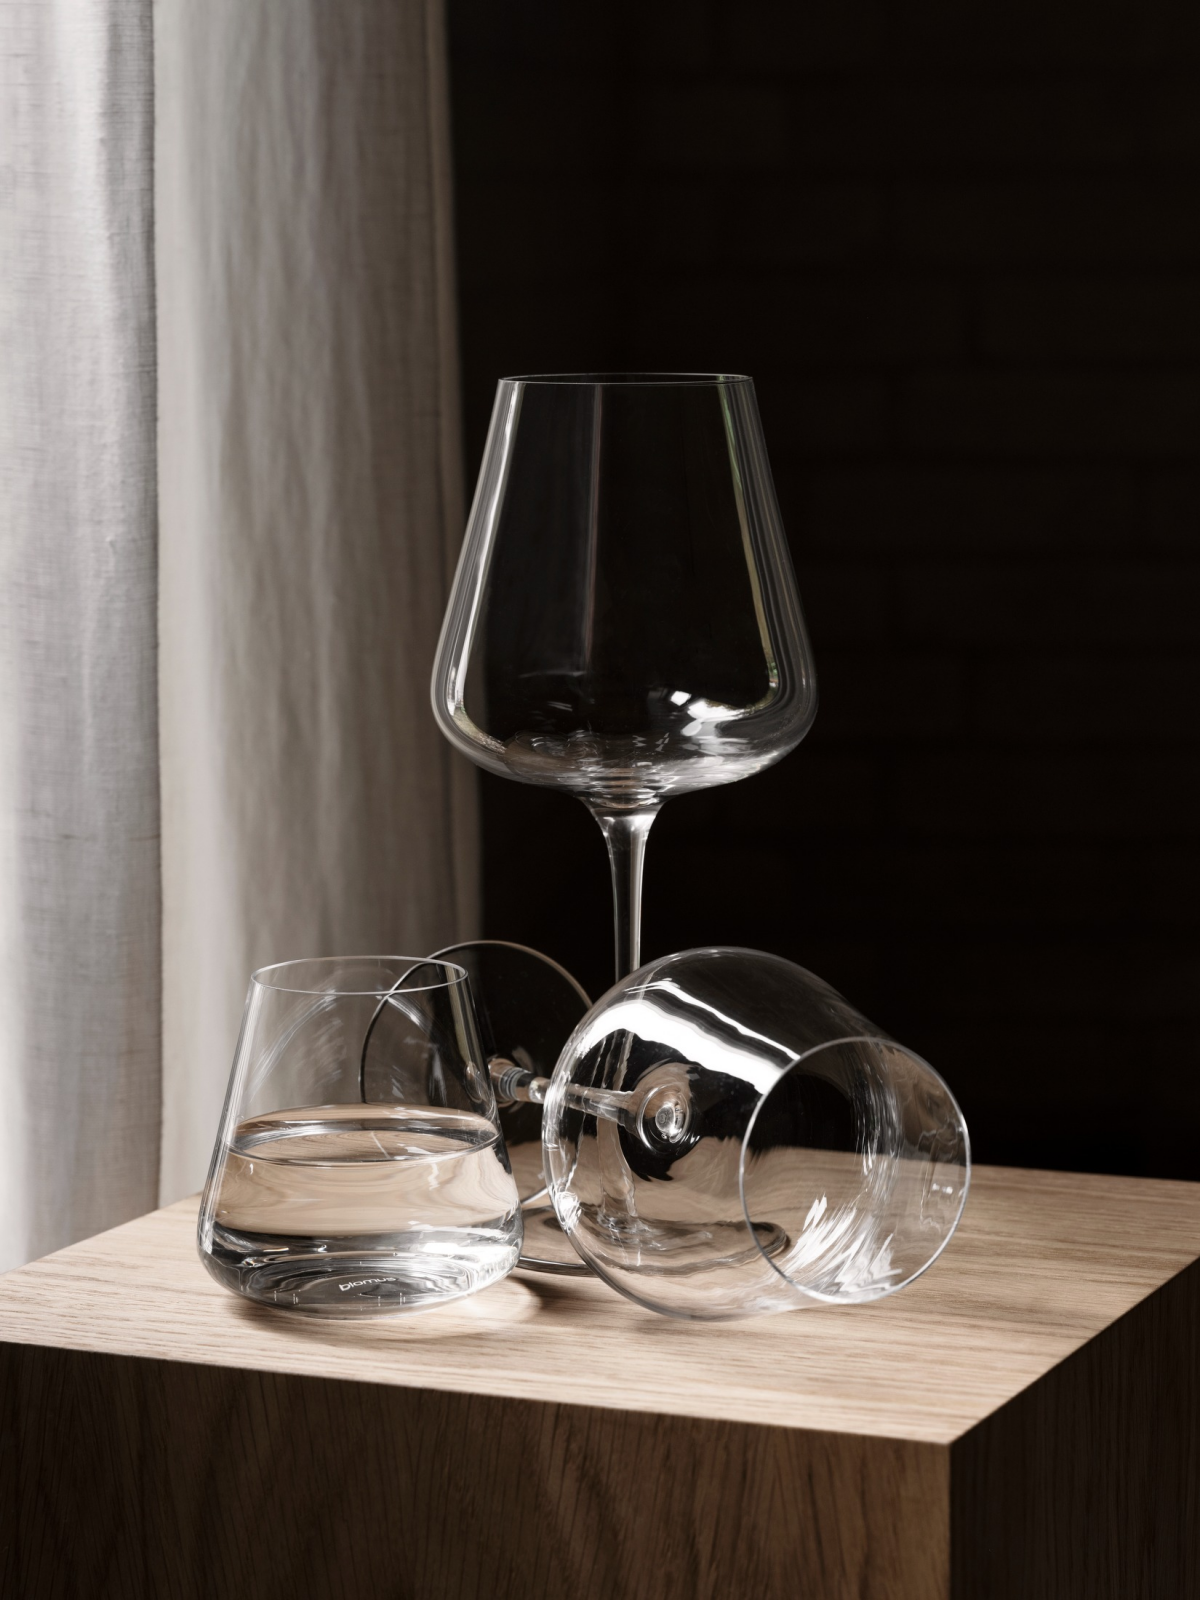 wine & drinking glasses